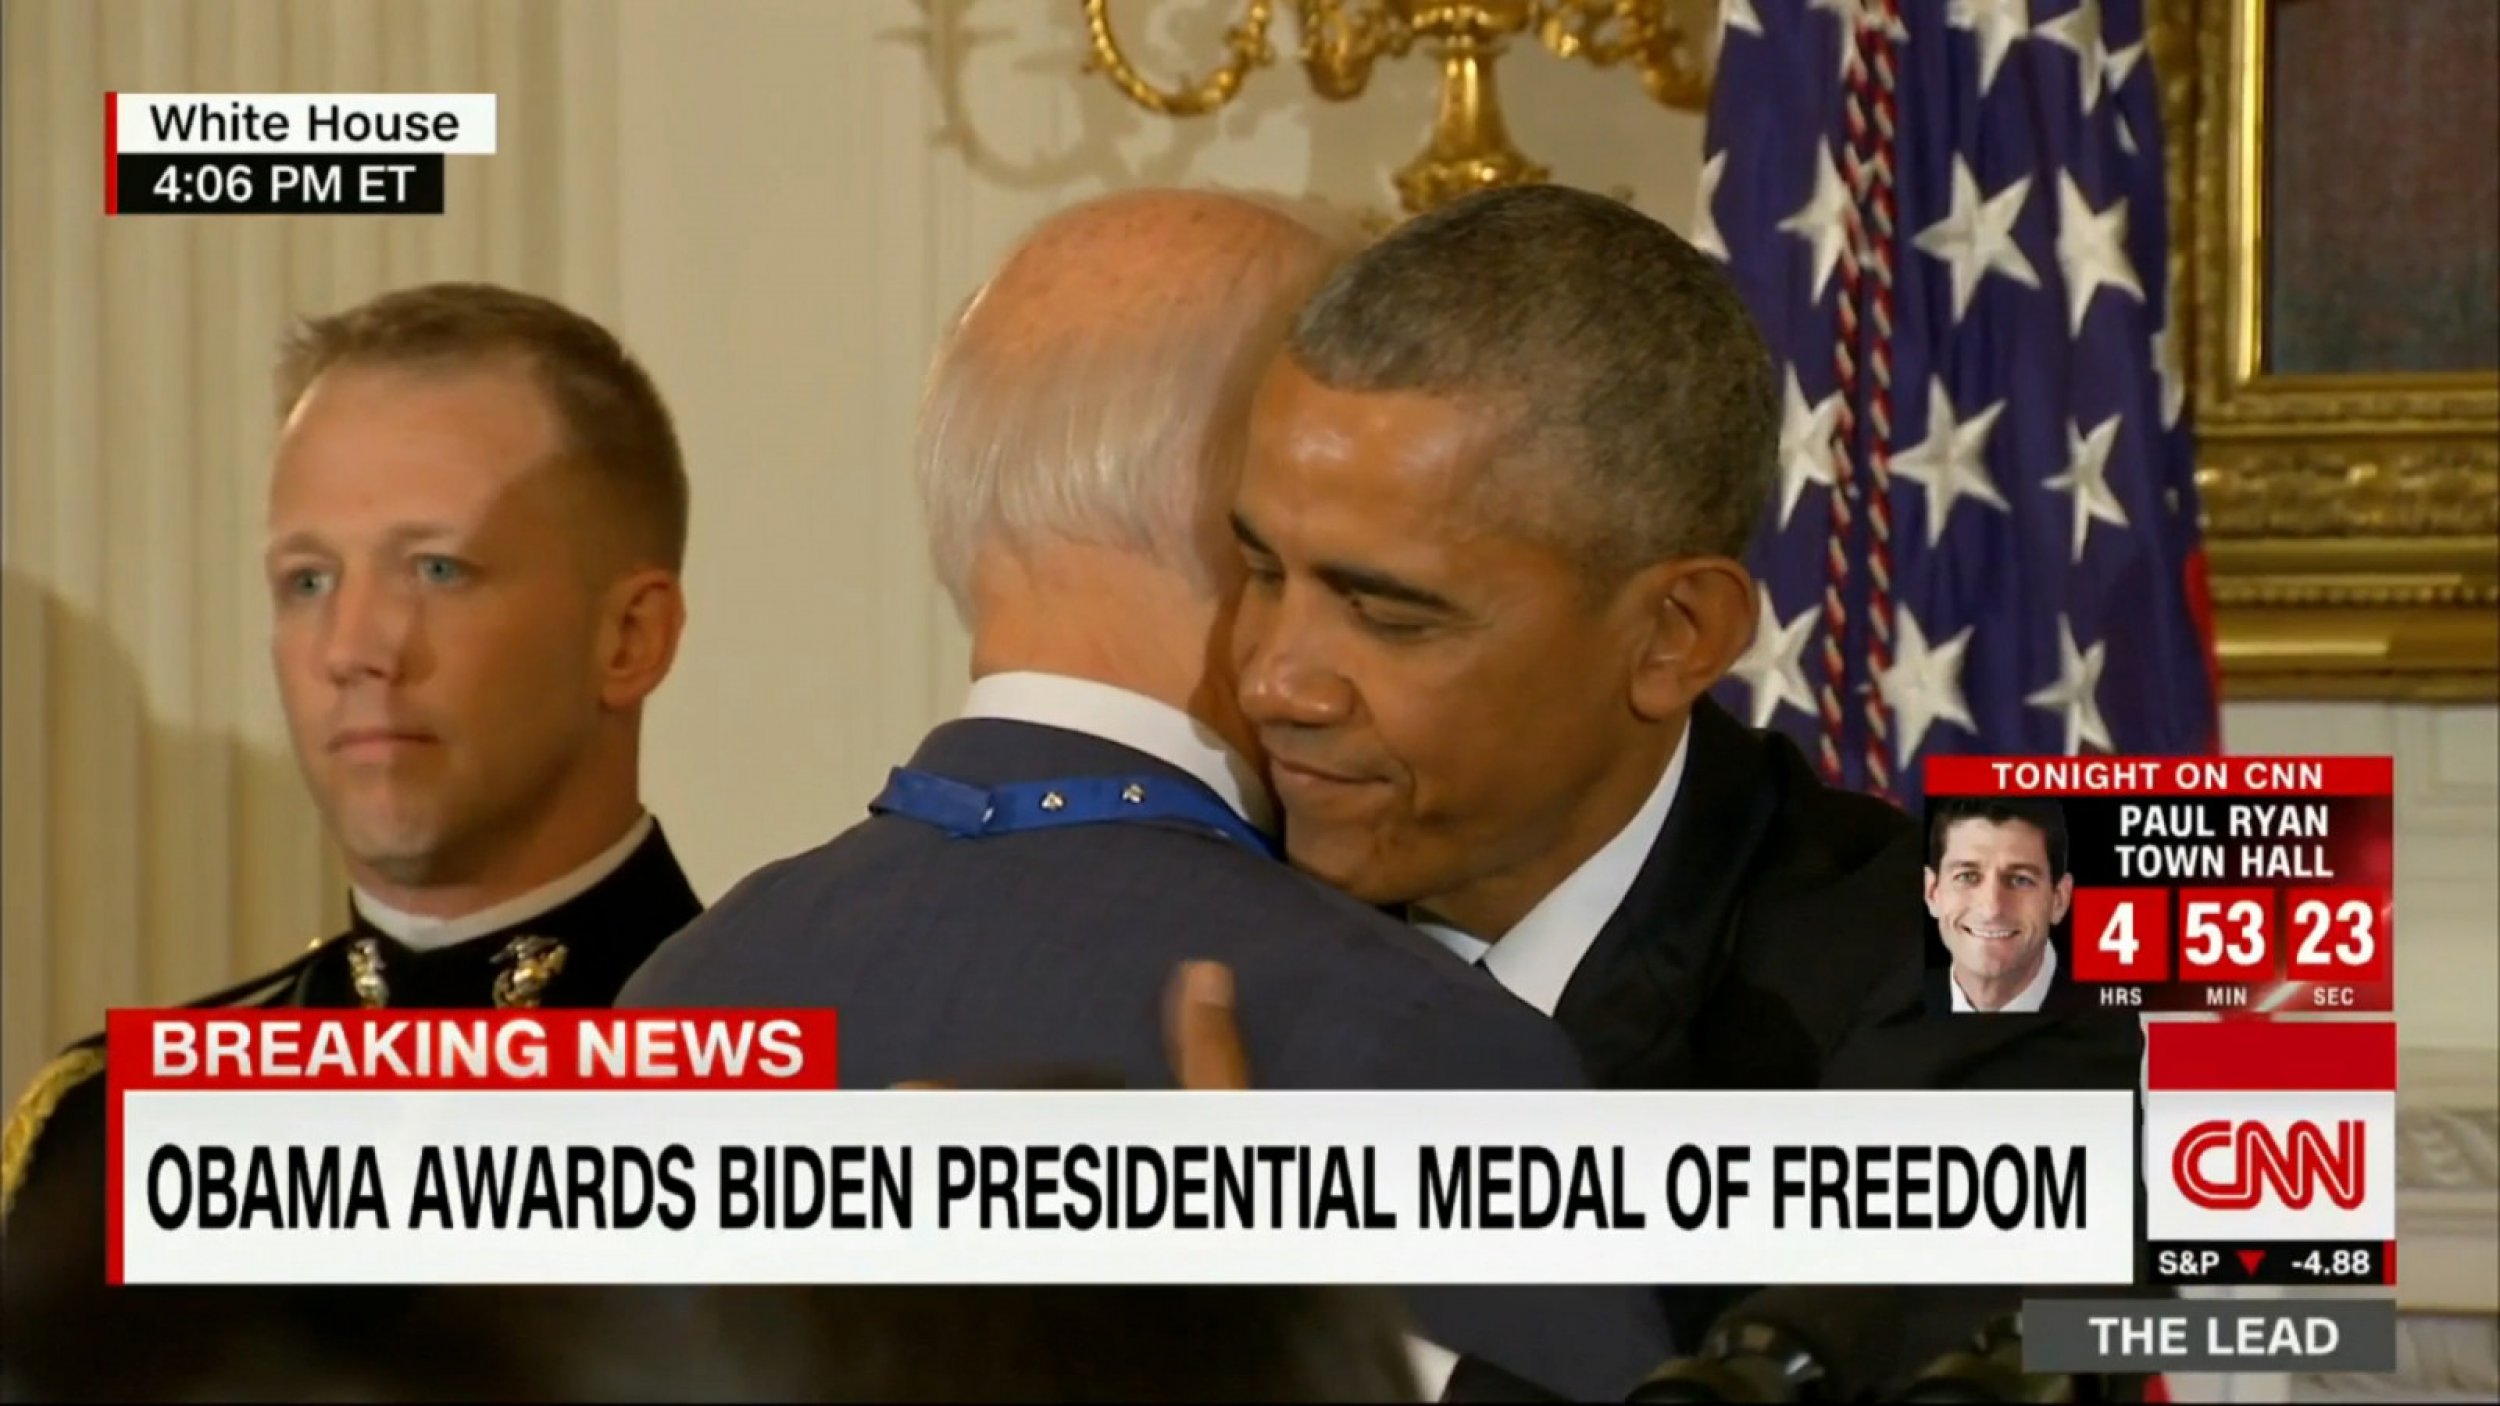 President Obama Awards Joe Biden Presidential Medal Of Freedom With Distinction